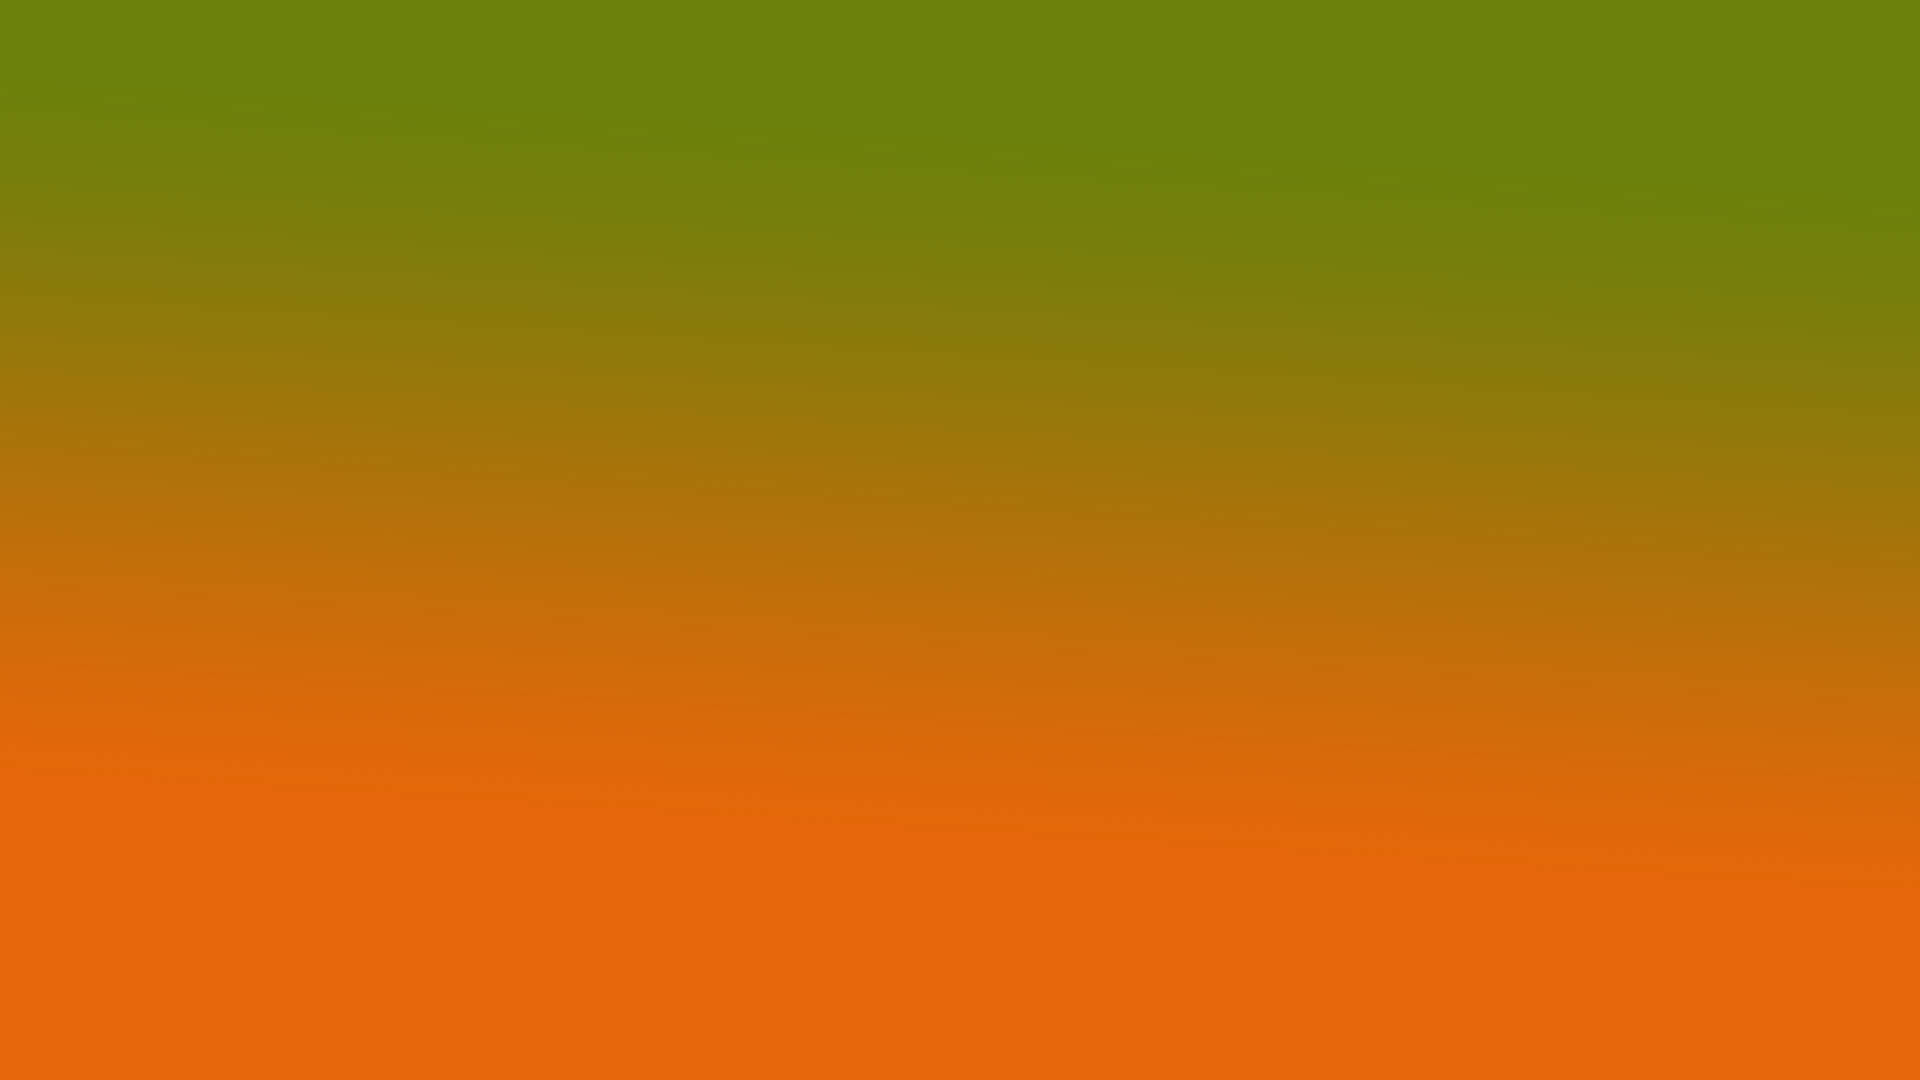 Solid Orange 3840 X 2160 Wallpaper